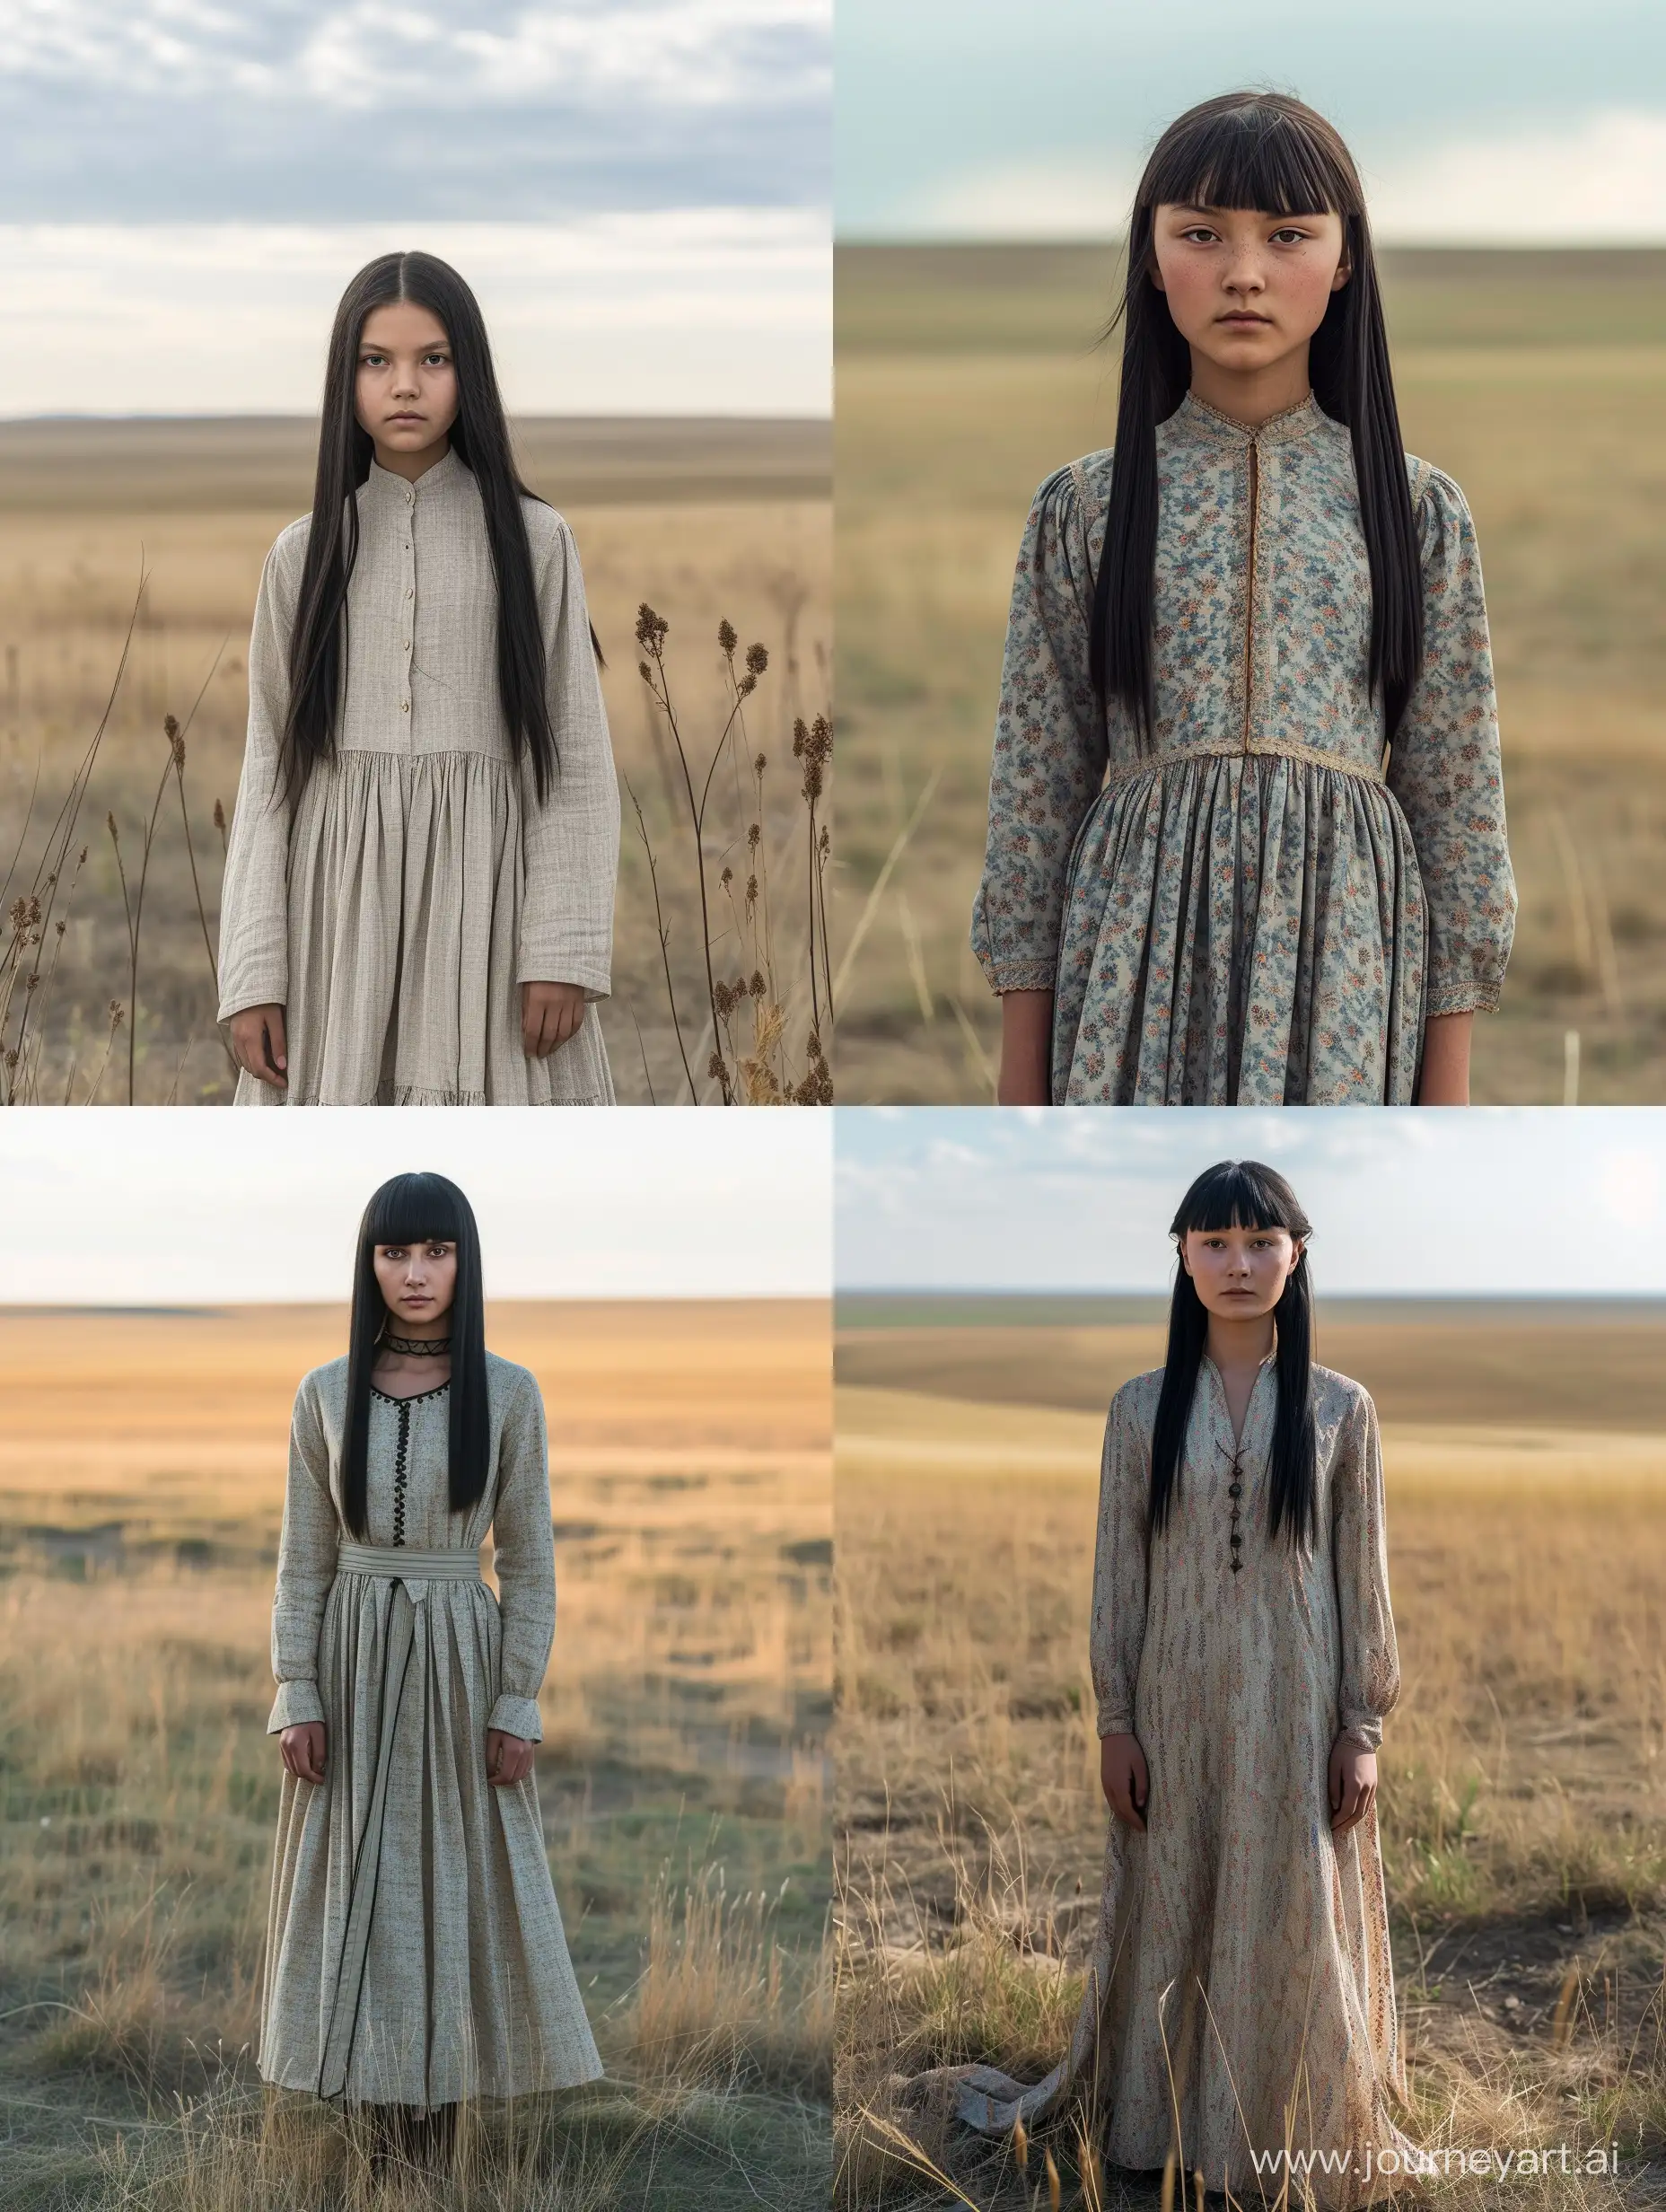 NogaiCrimean-Tatar-Girl-in-Traditional-Dress-Amidst-Steppe-Landscape